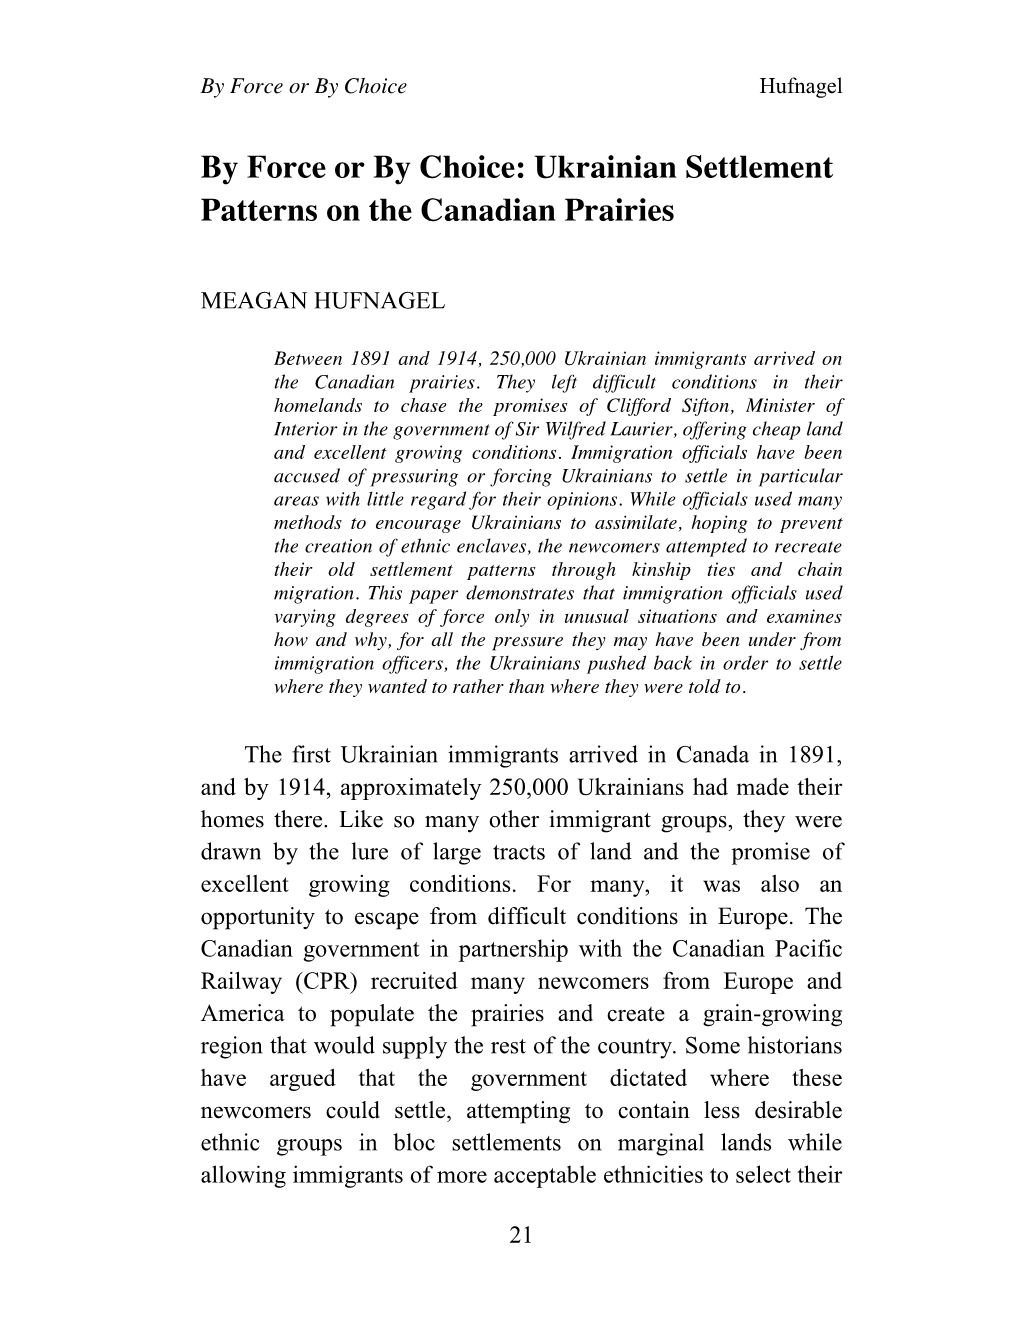 Ukrainian Settlement Patterns on the Canadian Prairies